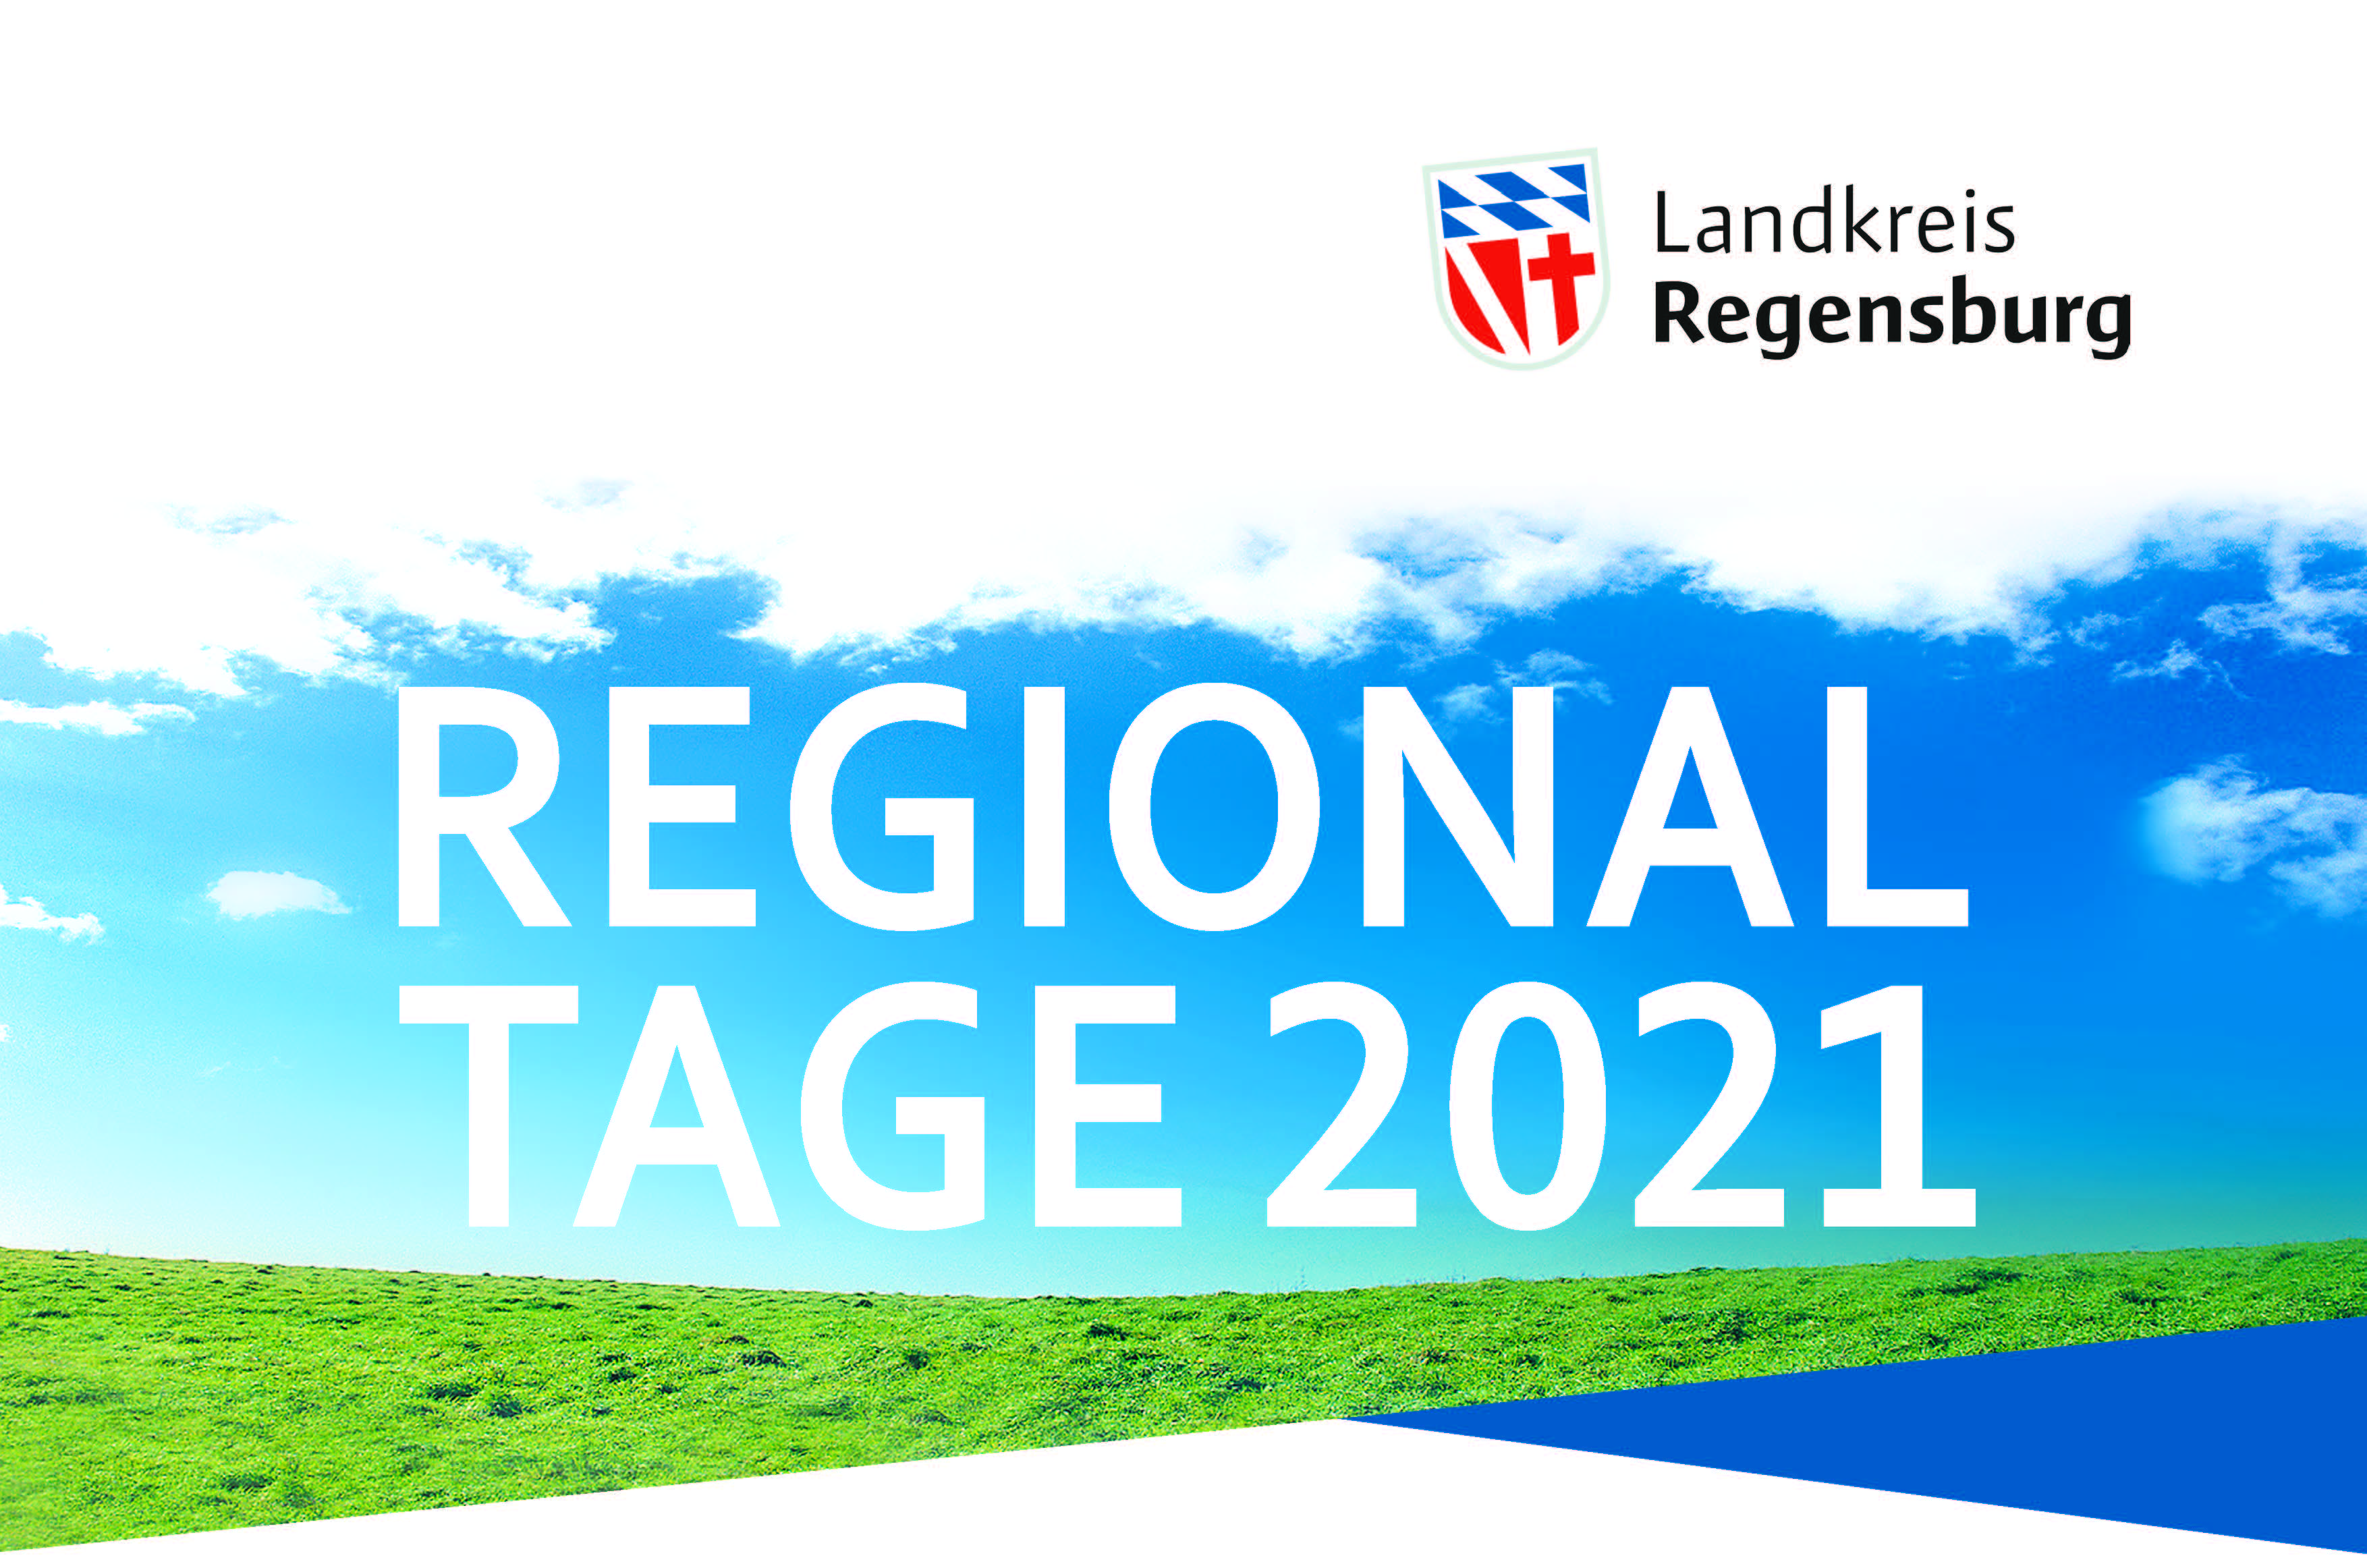 Regionaltage Landkreis Regensburg